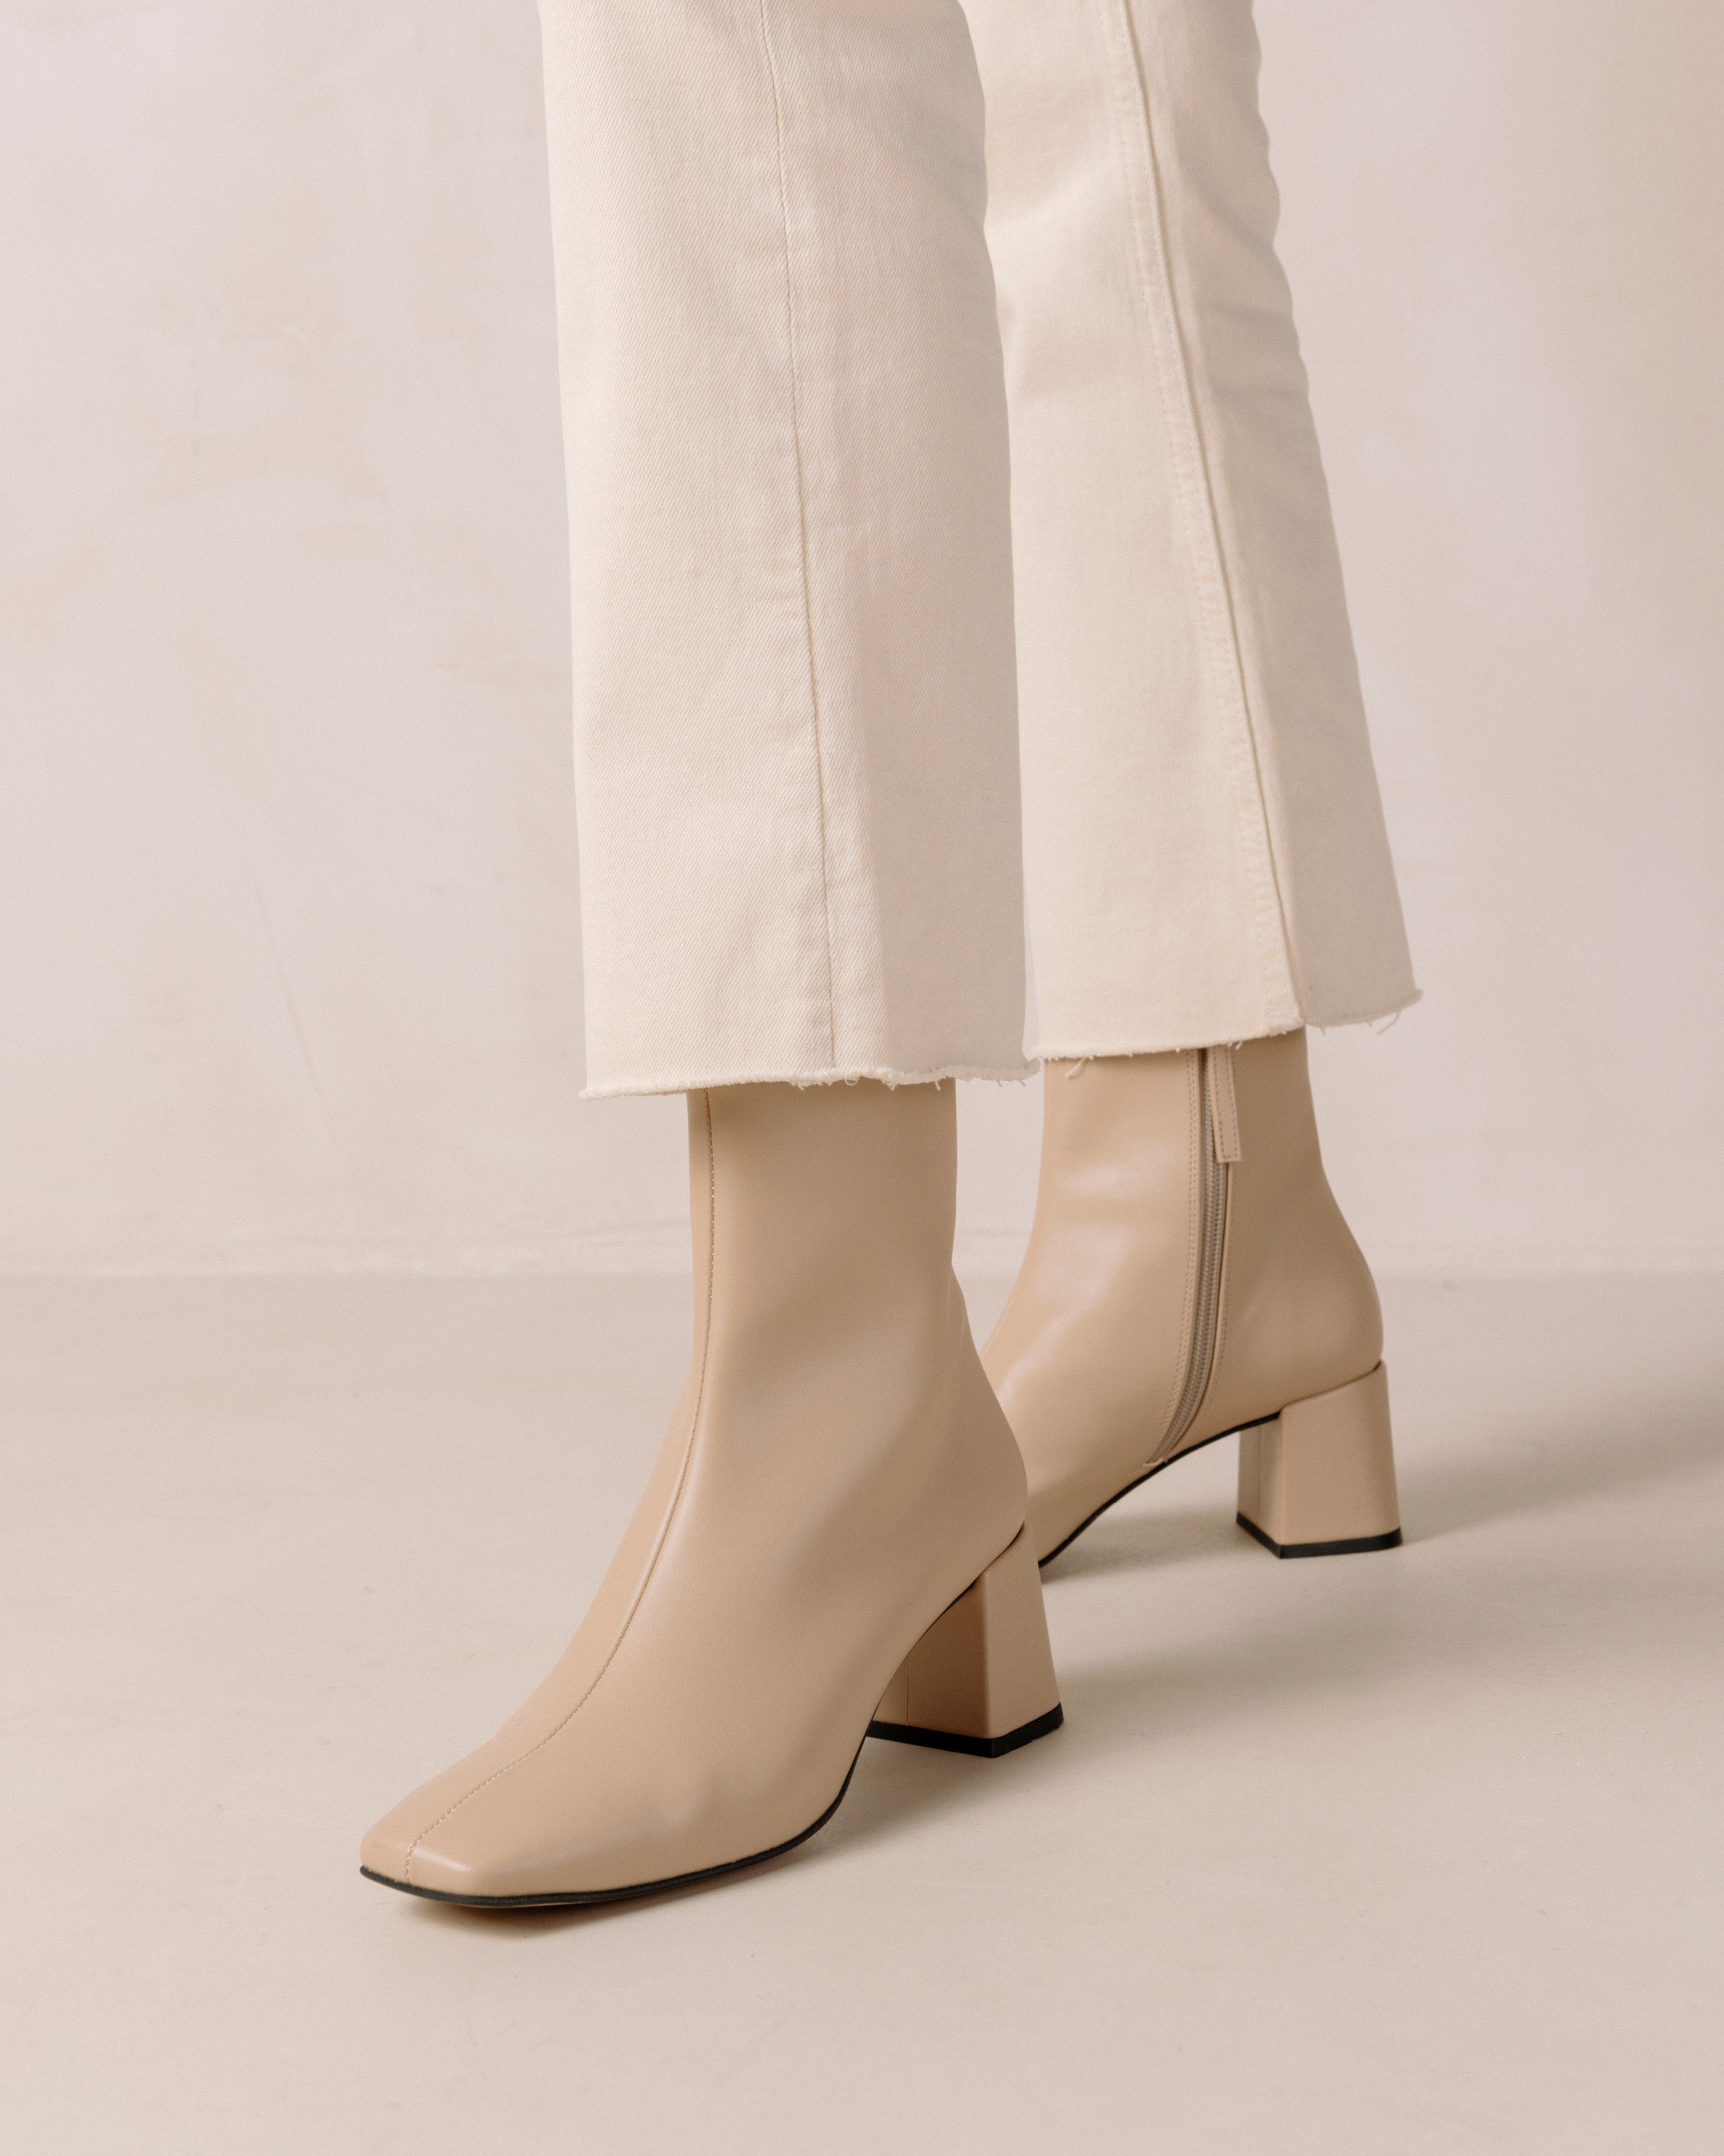 watercolor-tahini-beige-ankle-boots-svegan-153021.jpg